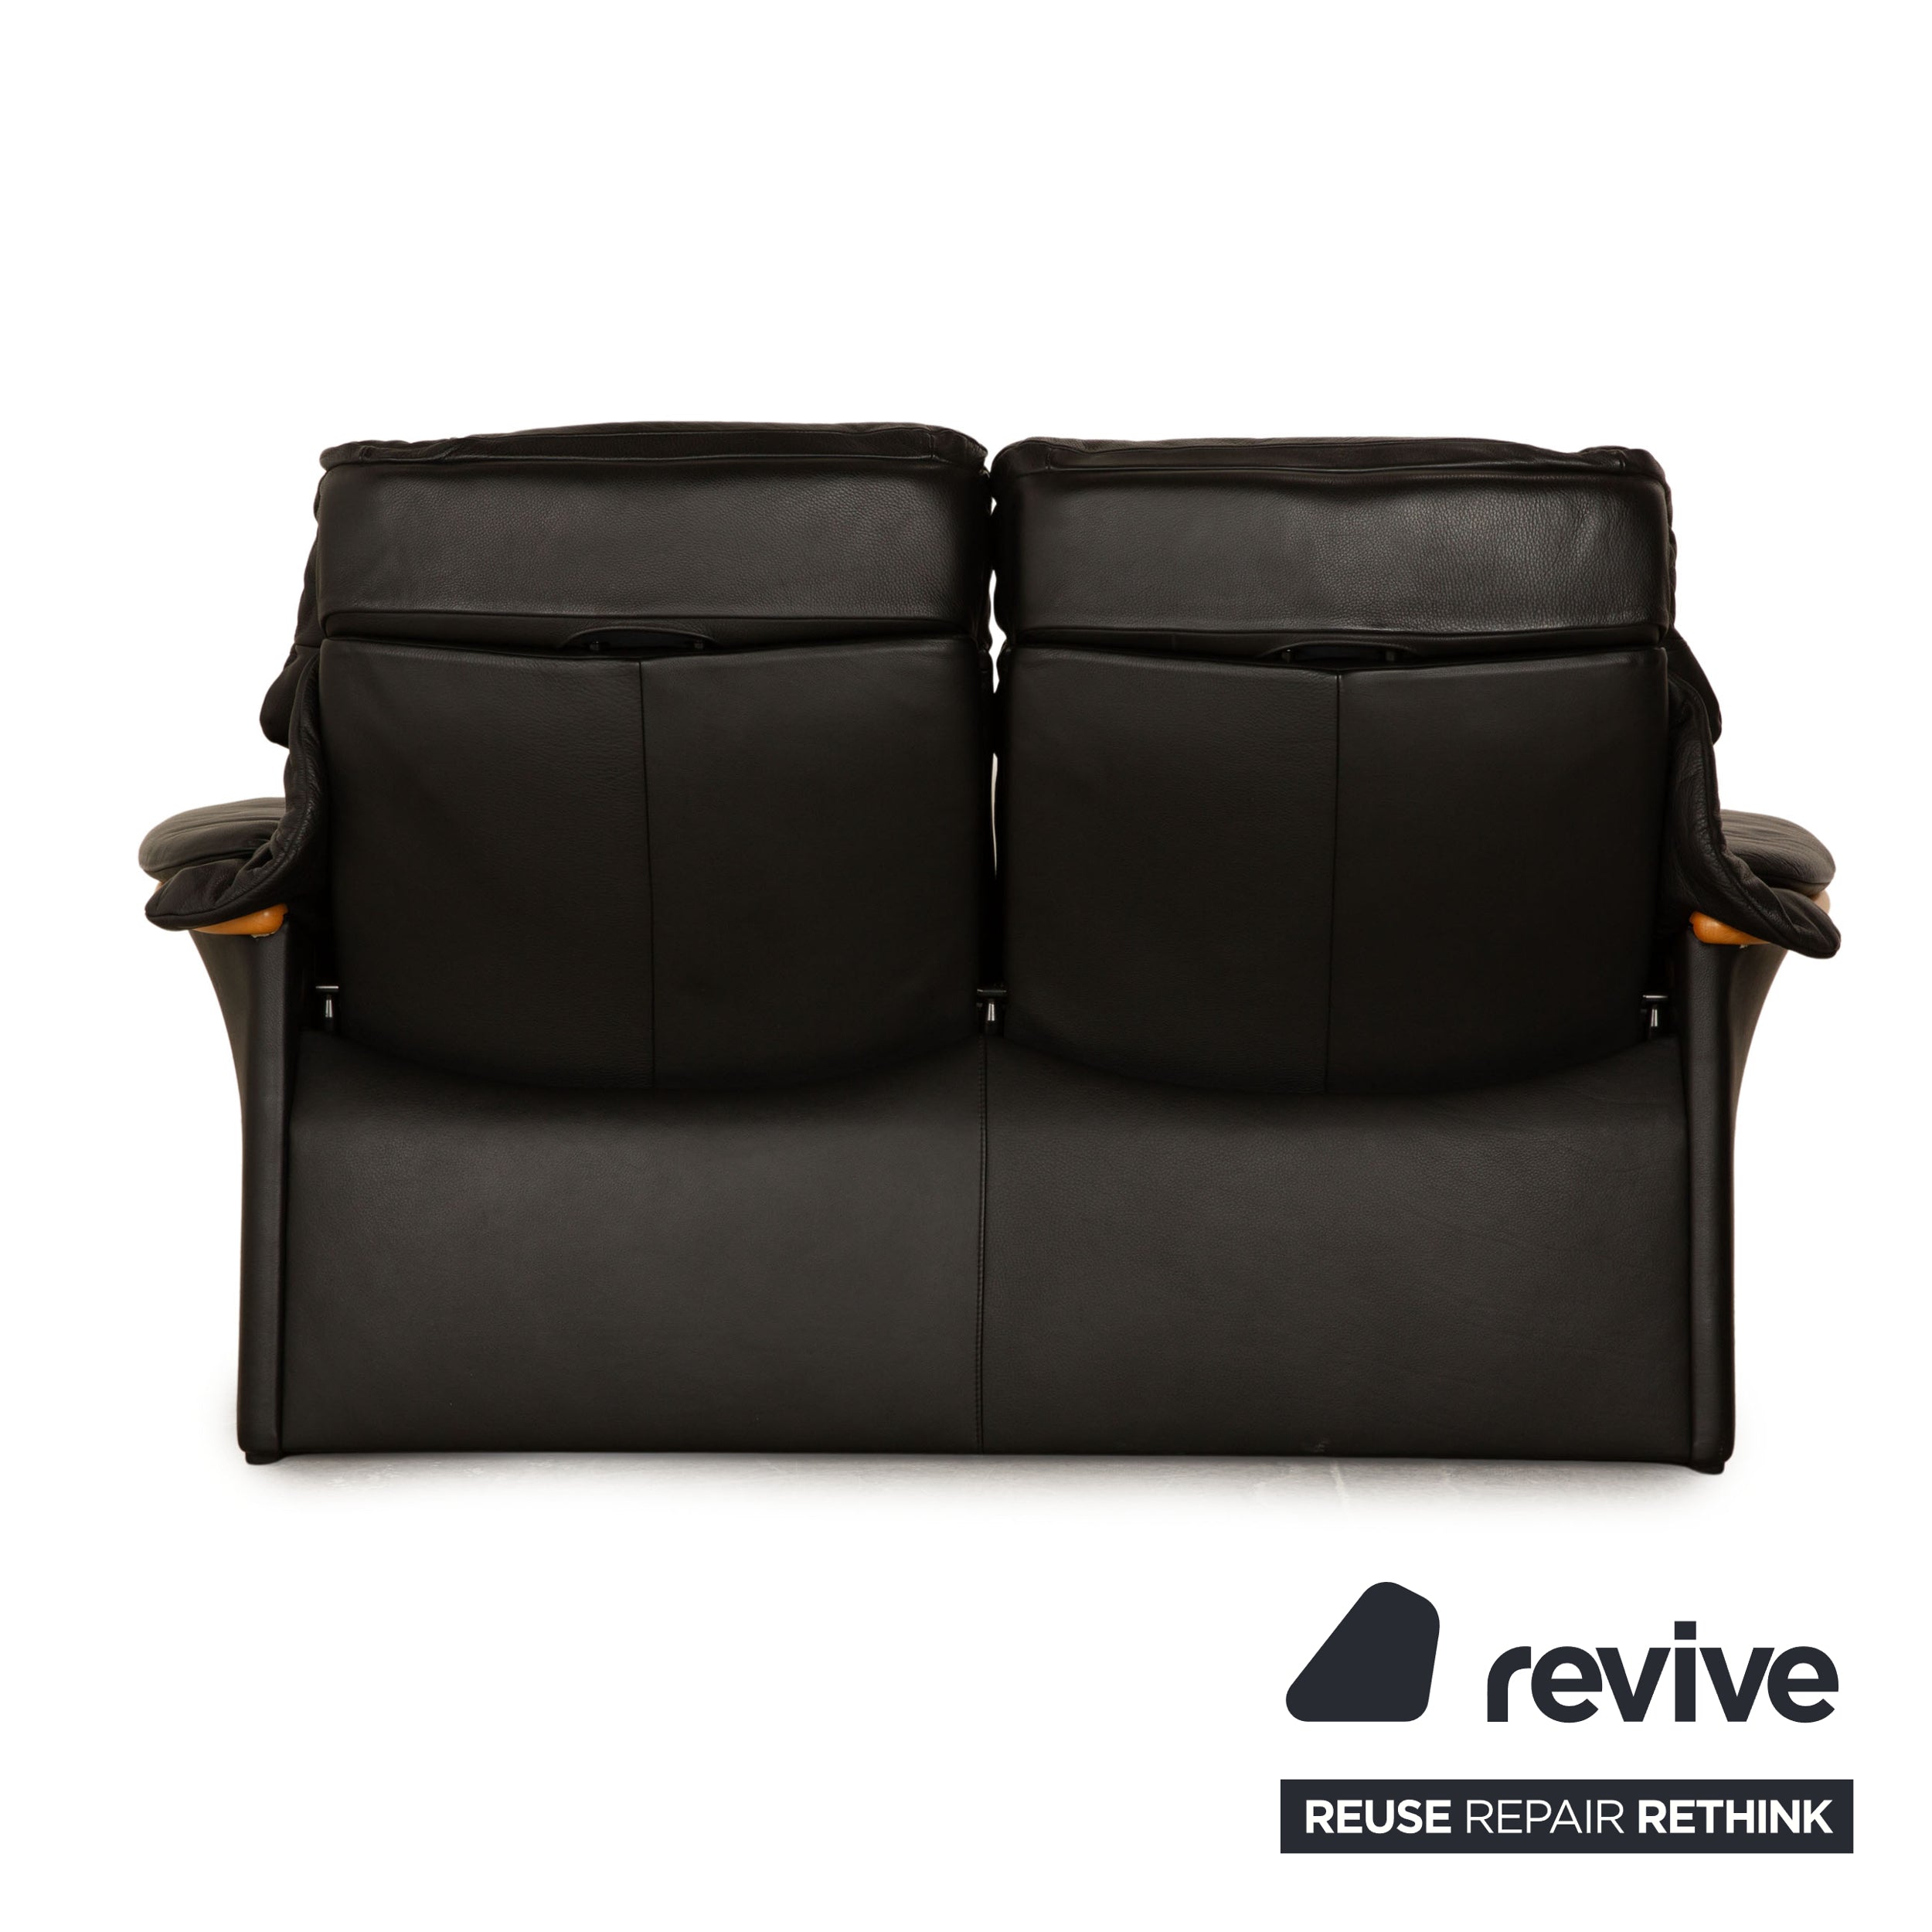 Stressless Eldorado leather sofa set black two-seater couch manual function